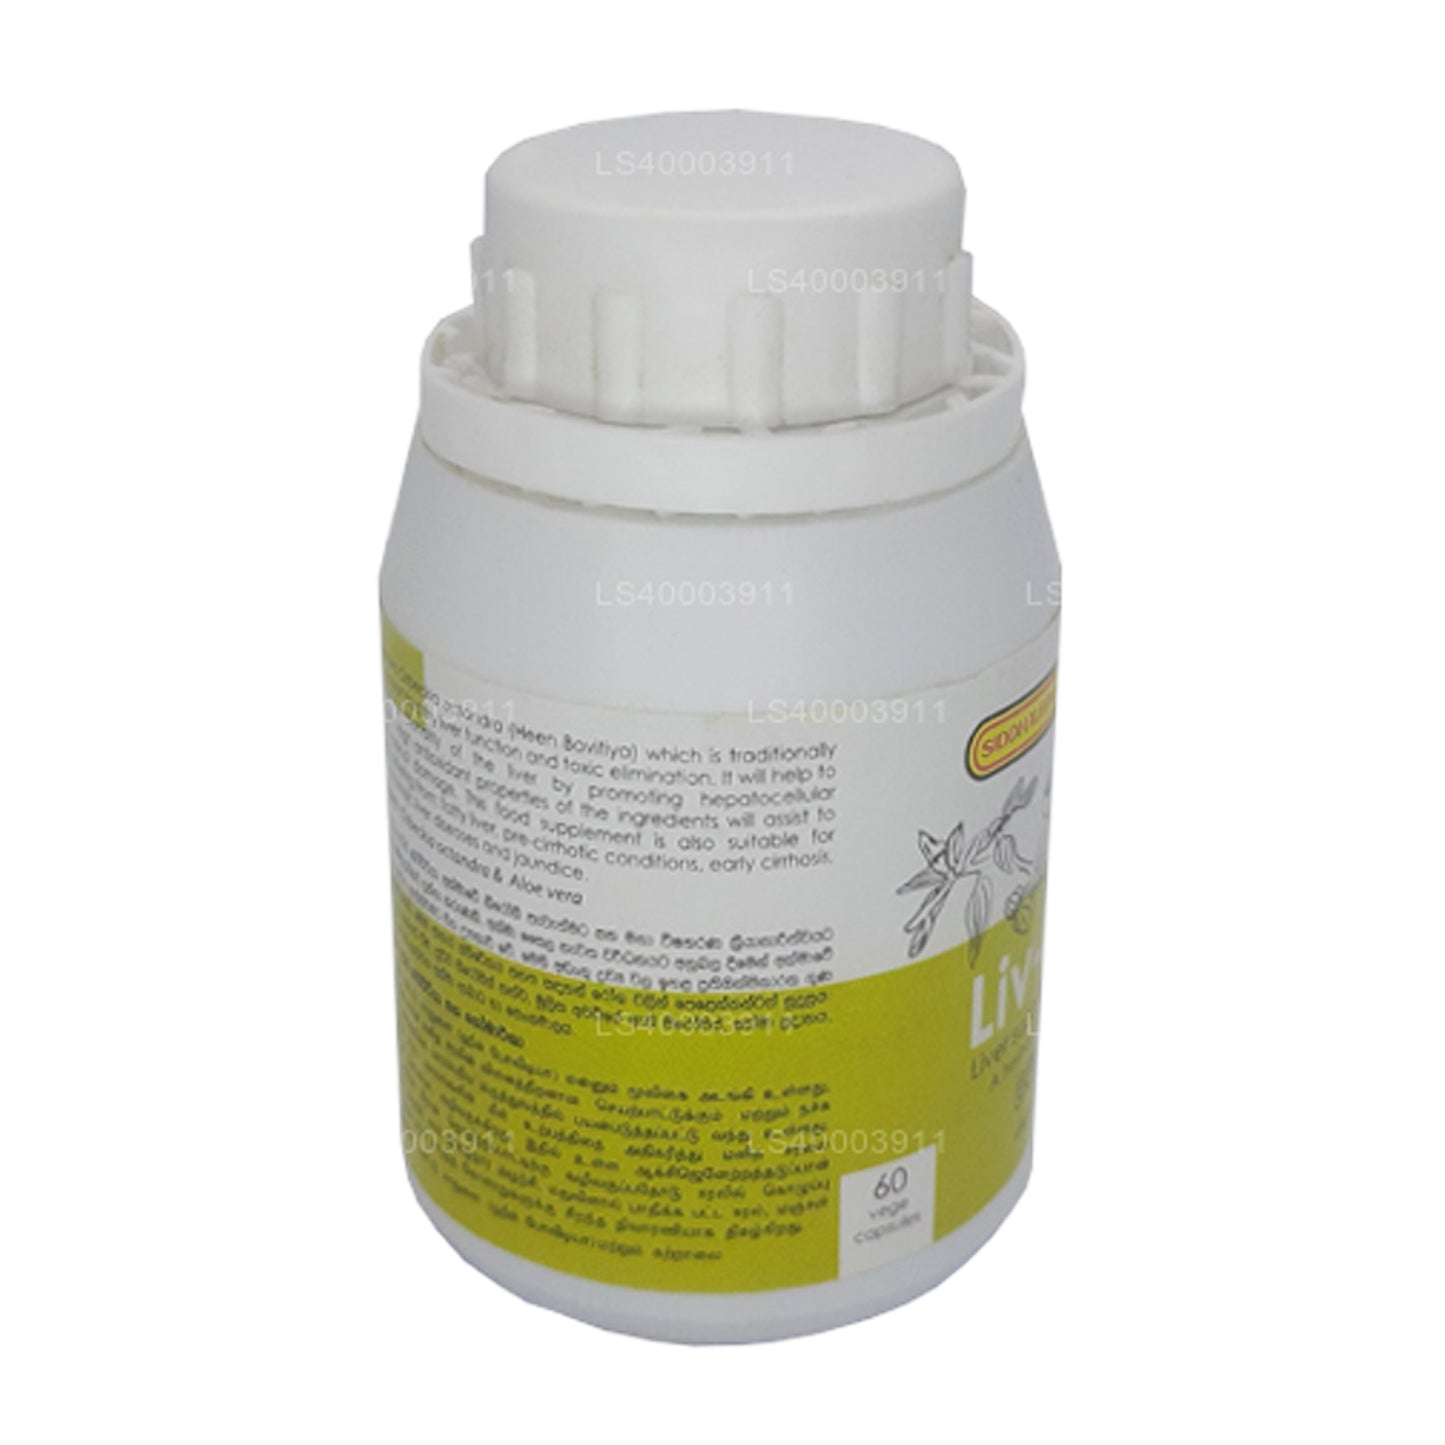 Siddhalepa Liv Pro (60 capsules)